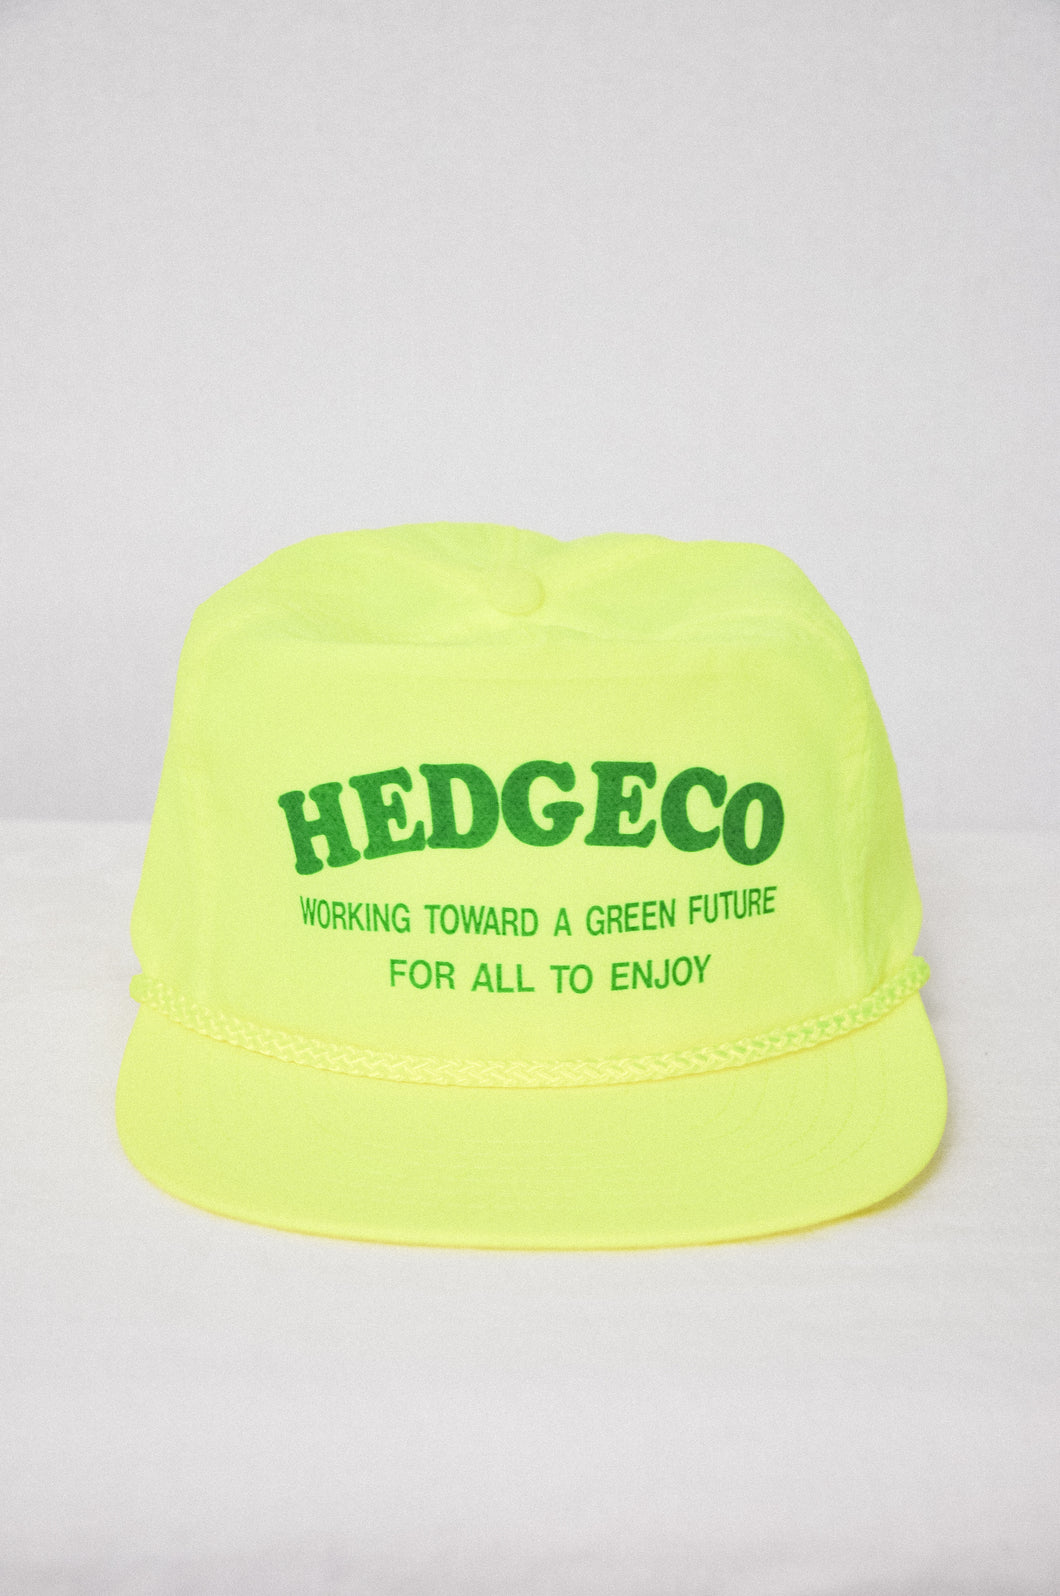 Vintage Neon Green Nylon Snapback Hat